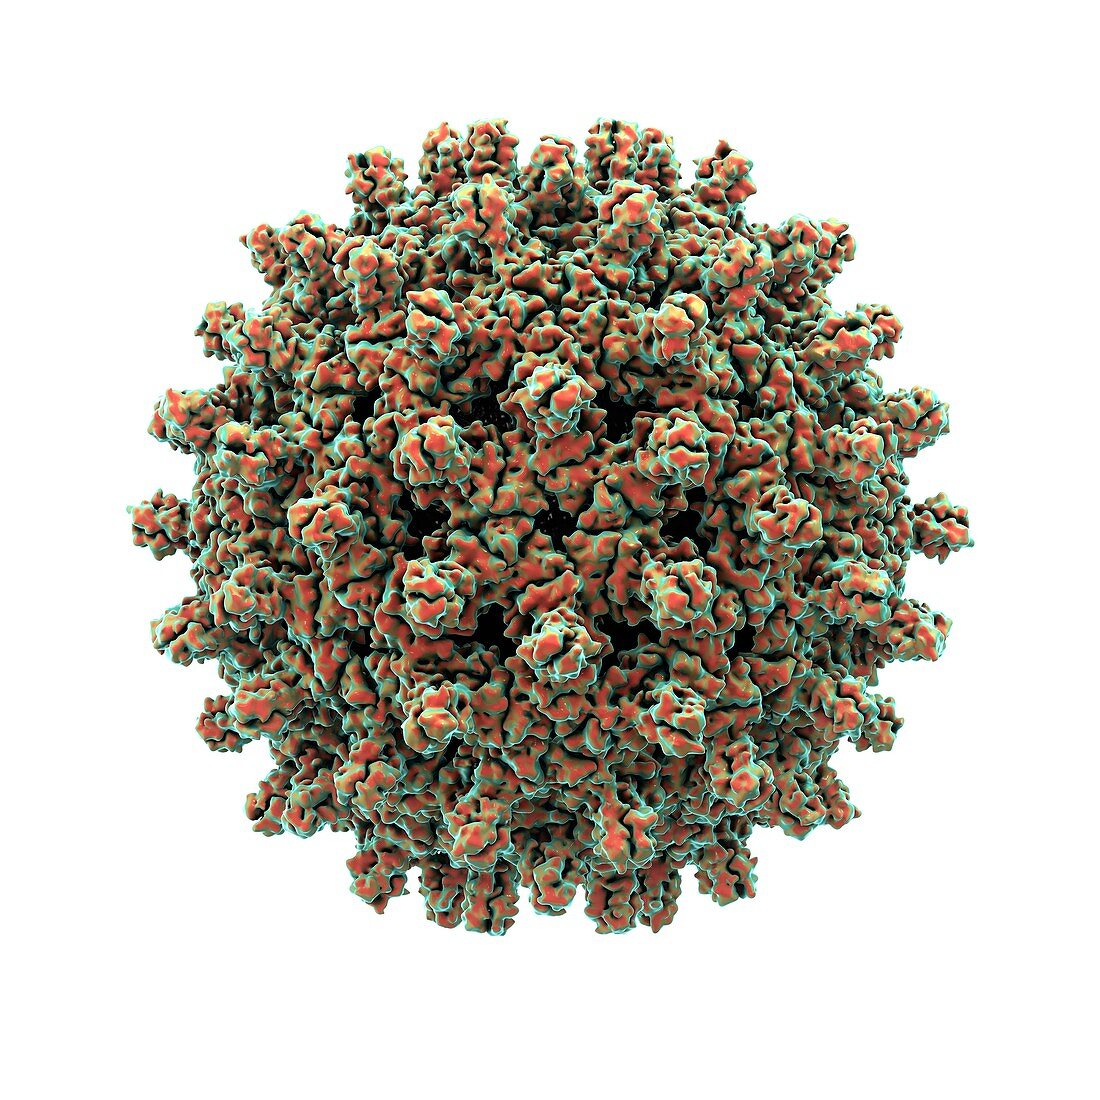 Hepatitis B virus particle,artwork